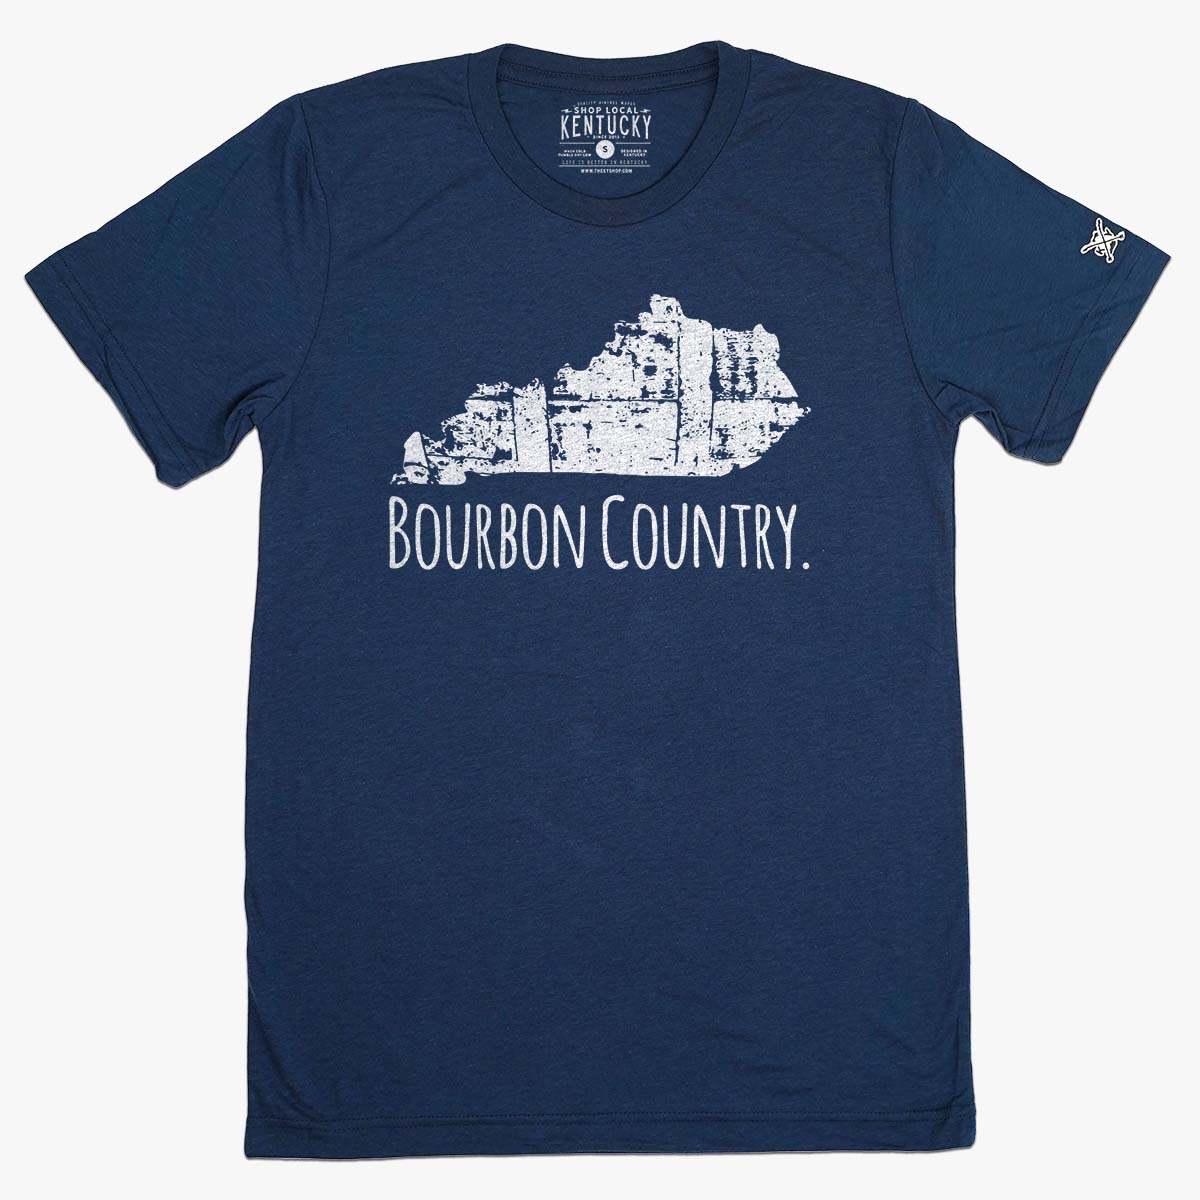 Bourbon Country Tee from Shop Local Kentucky – The Kentucky Shop